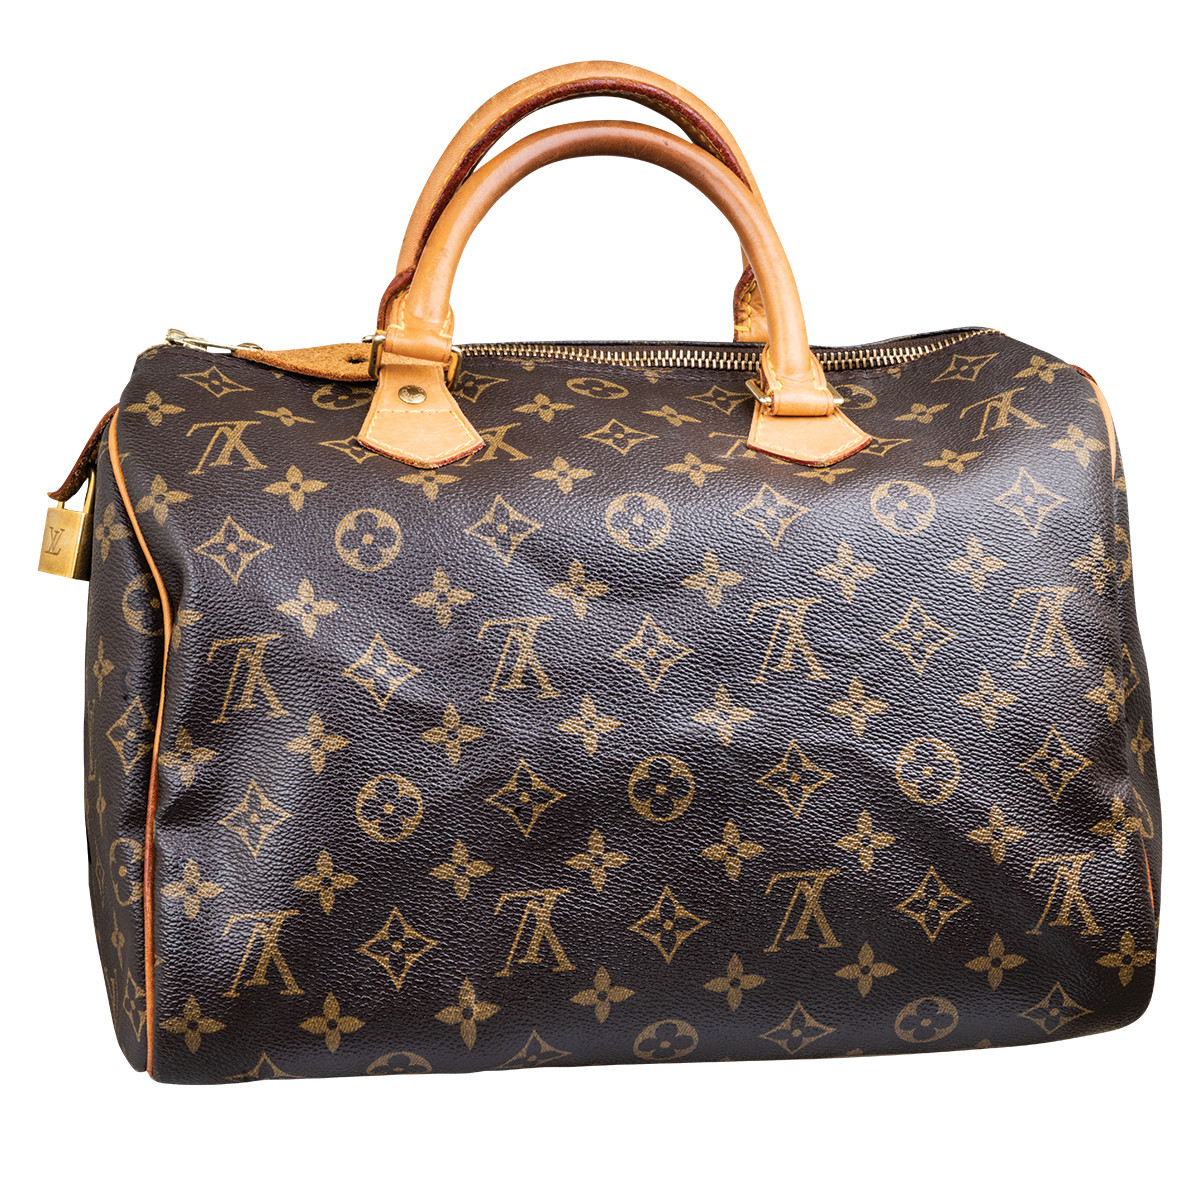 Sold at Auction: Louis Vuitton Speedy 30 Handbag - Monogram Empreinte,  cream leather, double strap handles, with padlock (no key), original box,  label, mini brochure. 30cm long, 22cm high.